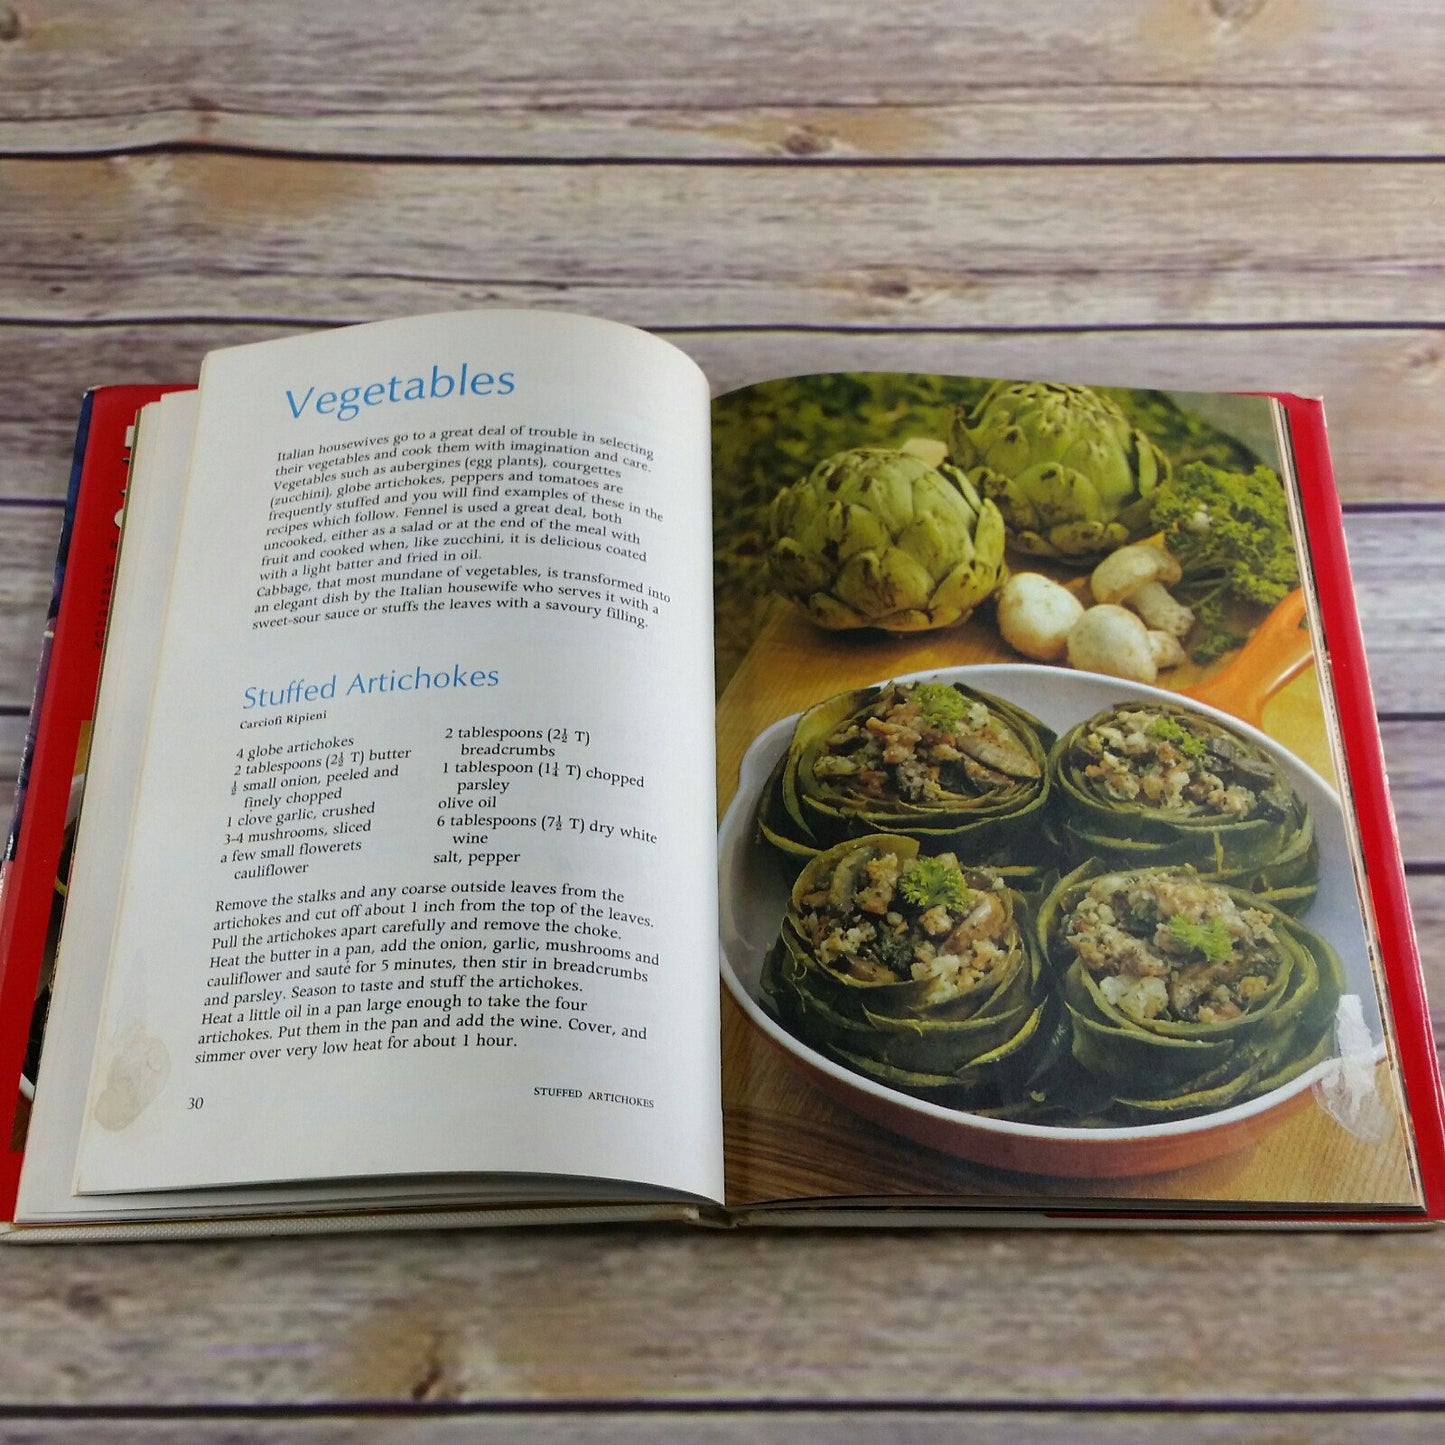 Vintage Popular Italian Cookbook Italian Cooking Recipes 1977 Hardcover Marion Howells Salads Soups Vegetables Sauces Desserts